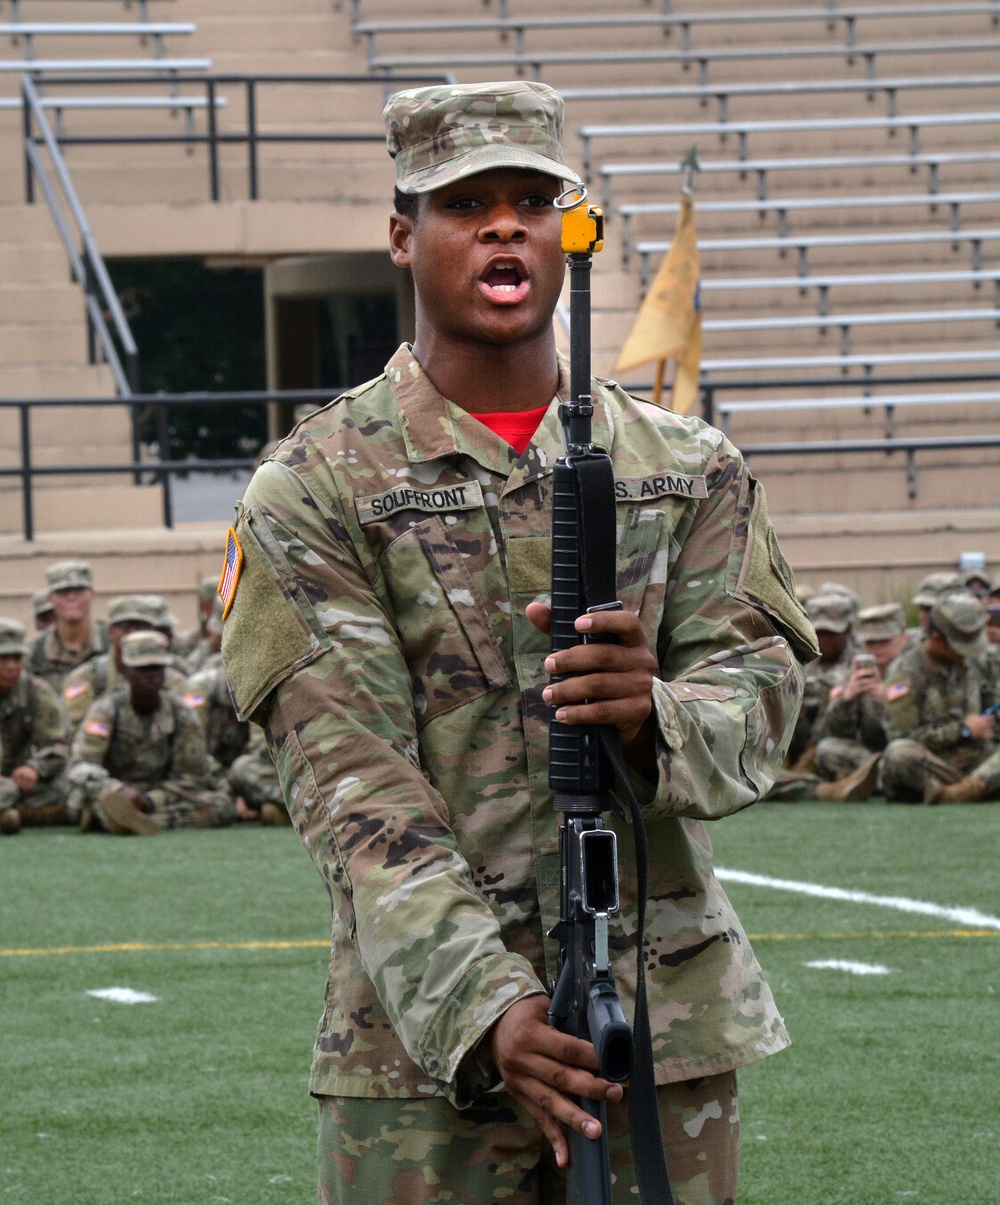 Drill showcase: Quartermaster troops display discipline cohesion, creativity